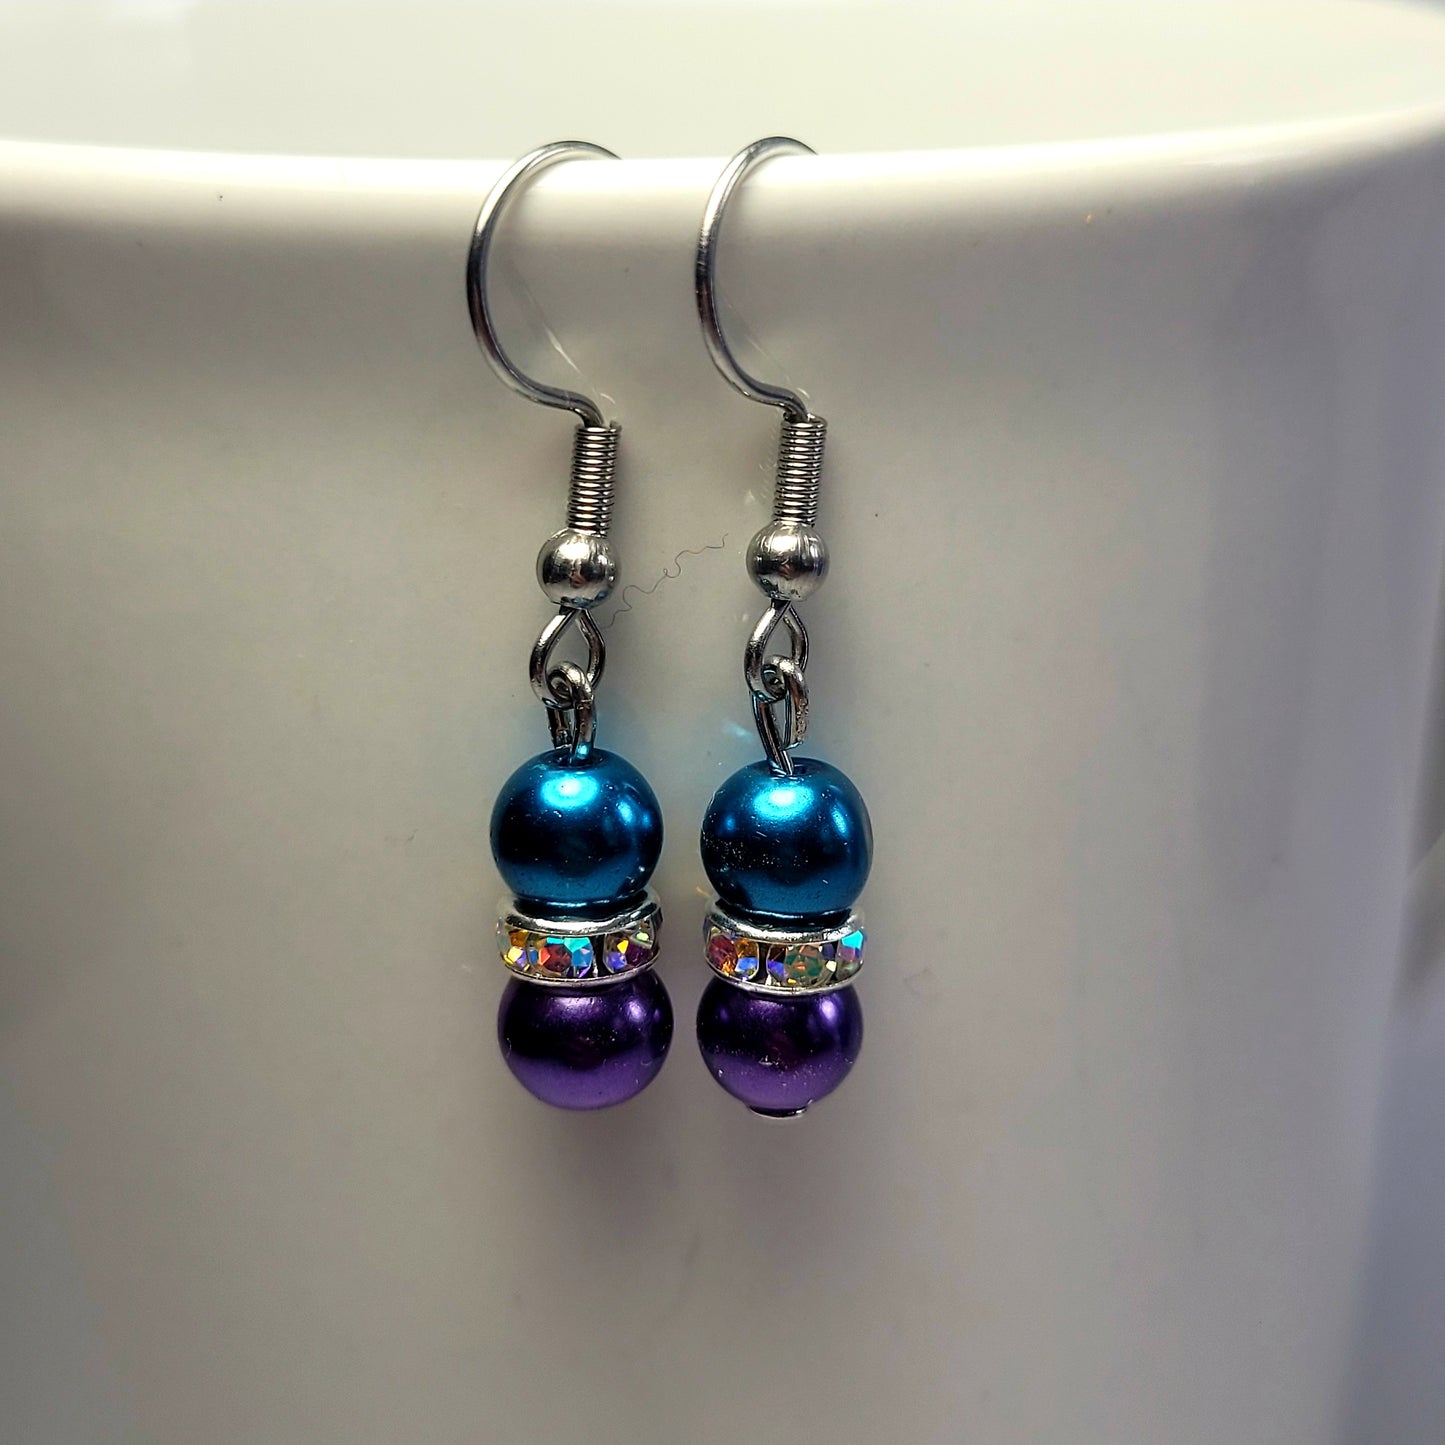 Earrings, blue and purple beads with diamonds